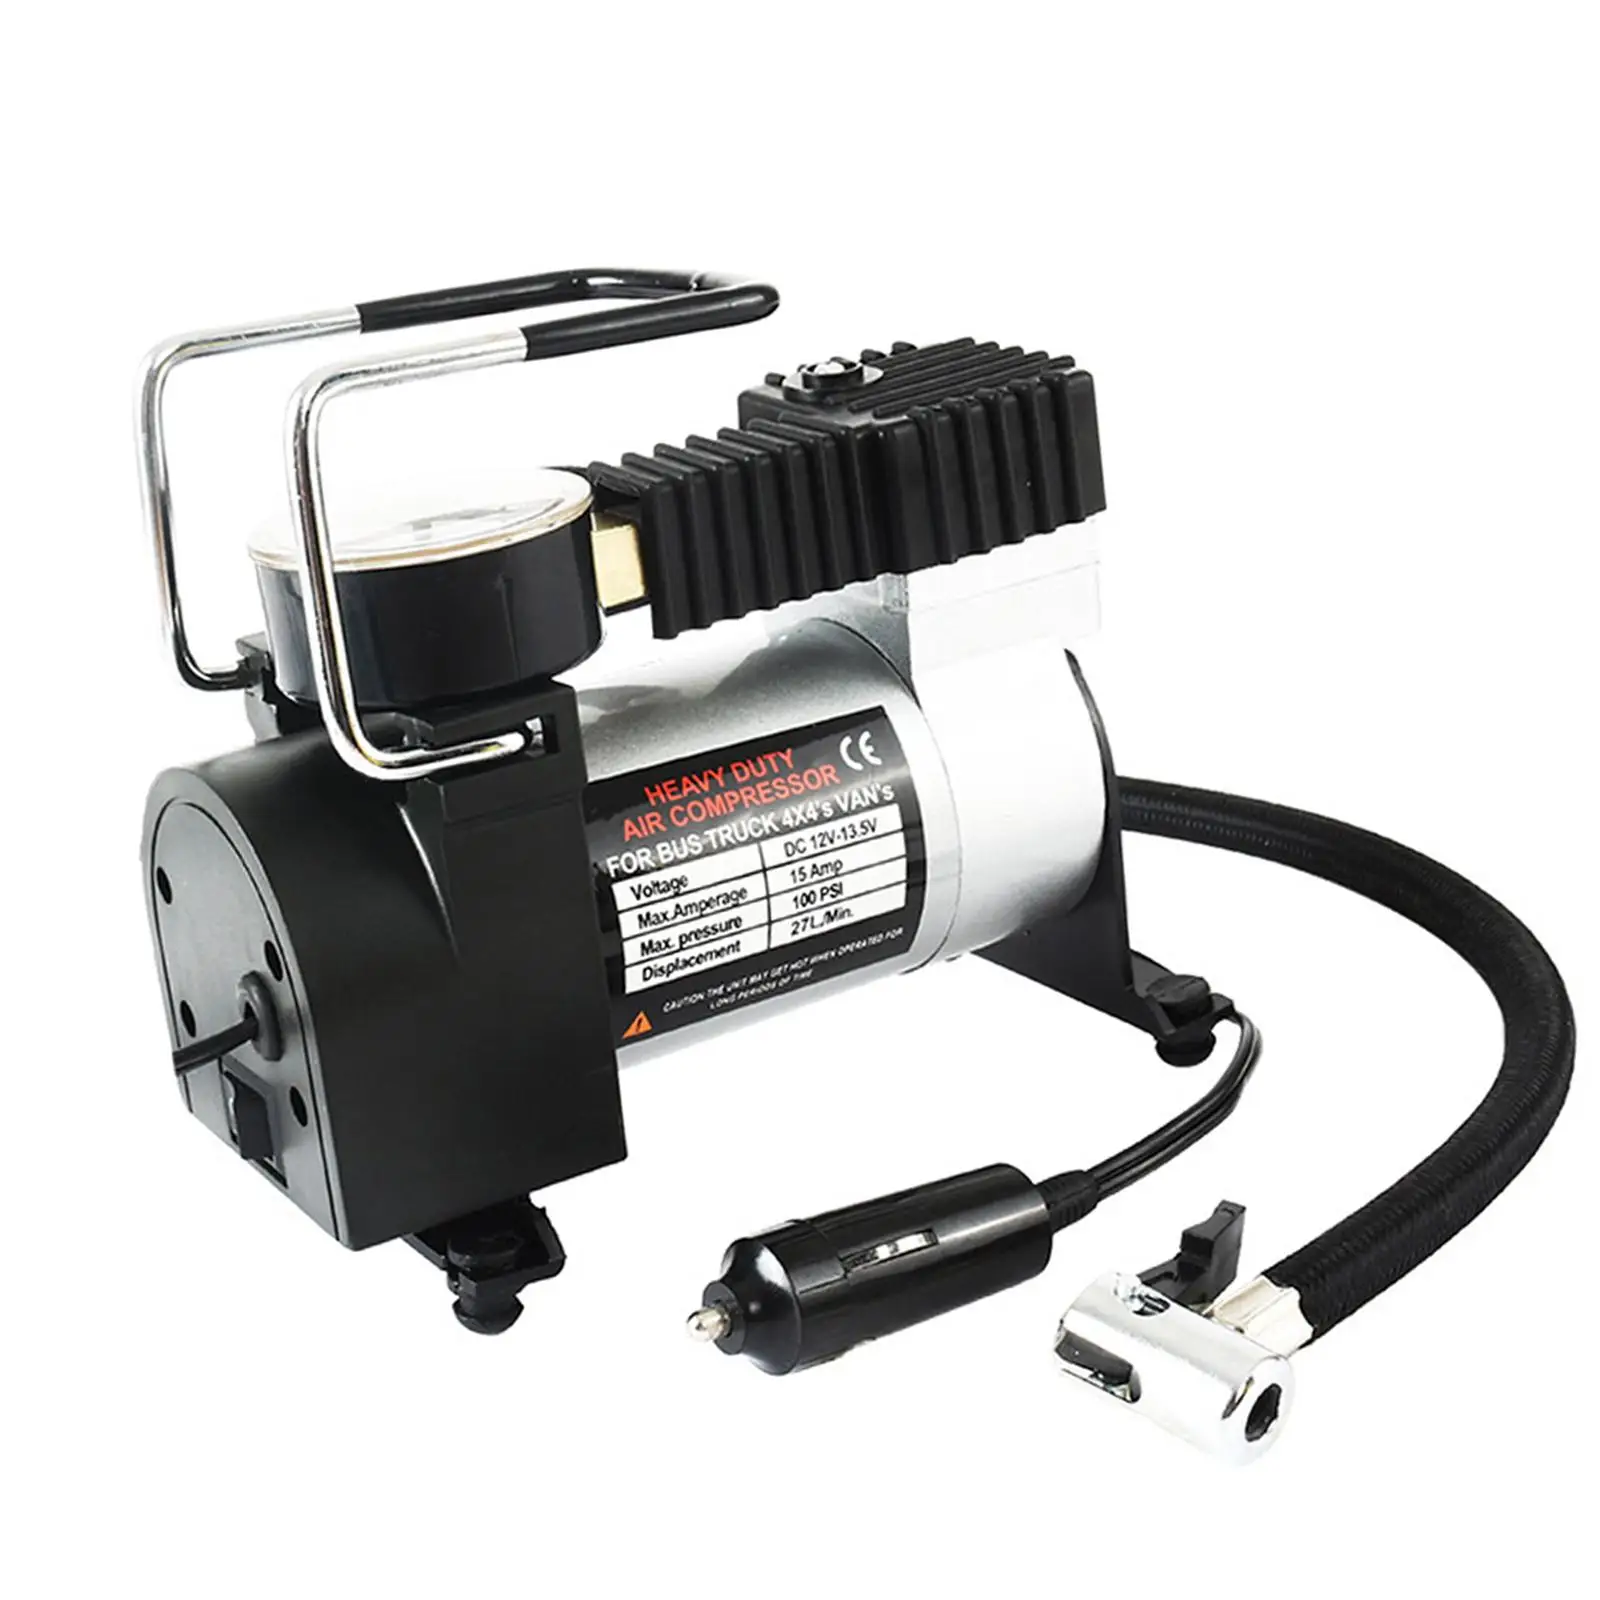 Tire Inflator Portable Handheld Charging Pump Compact Car Inflatable Pump Electric Air Compressor for SUV Trucks Van Cars